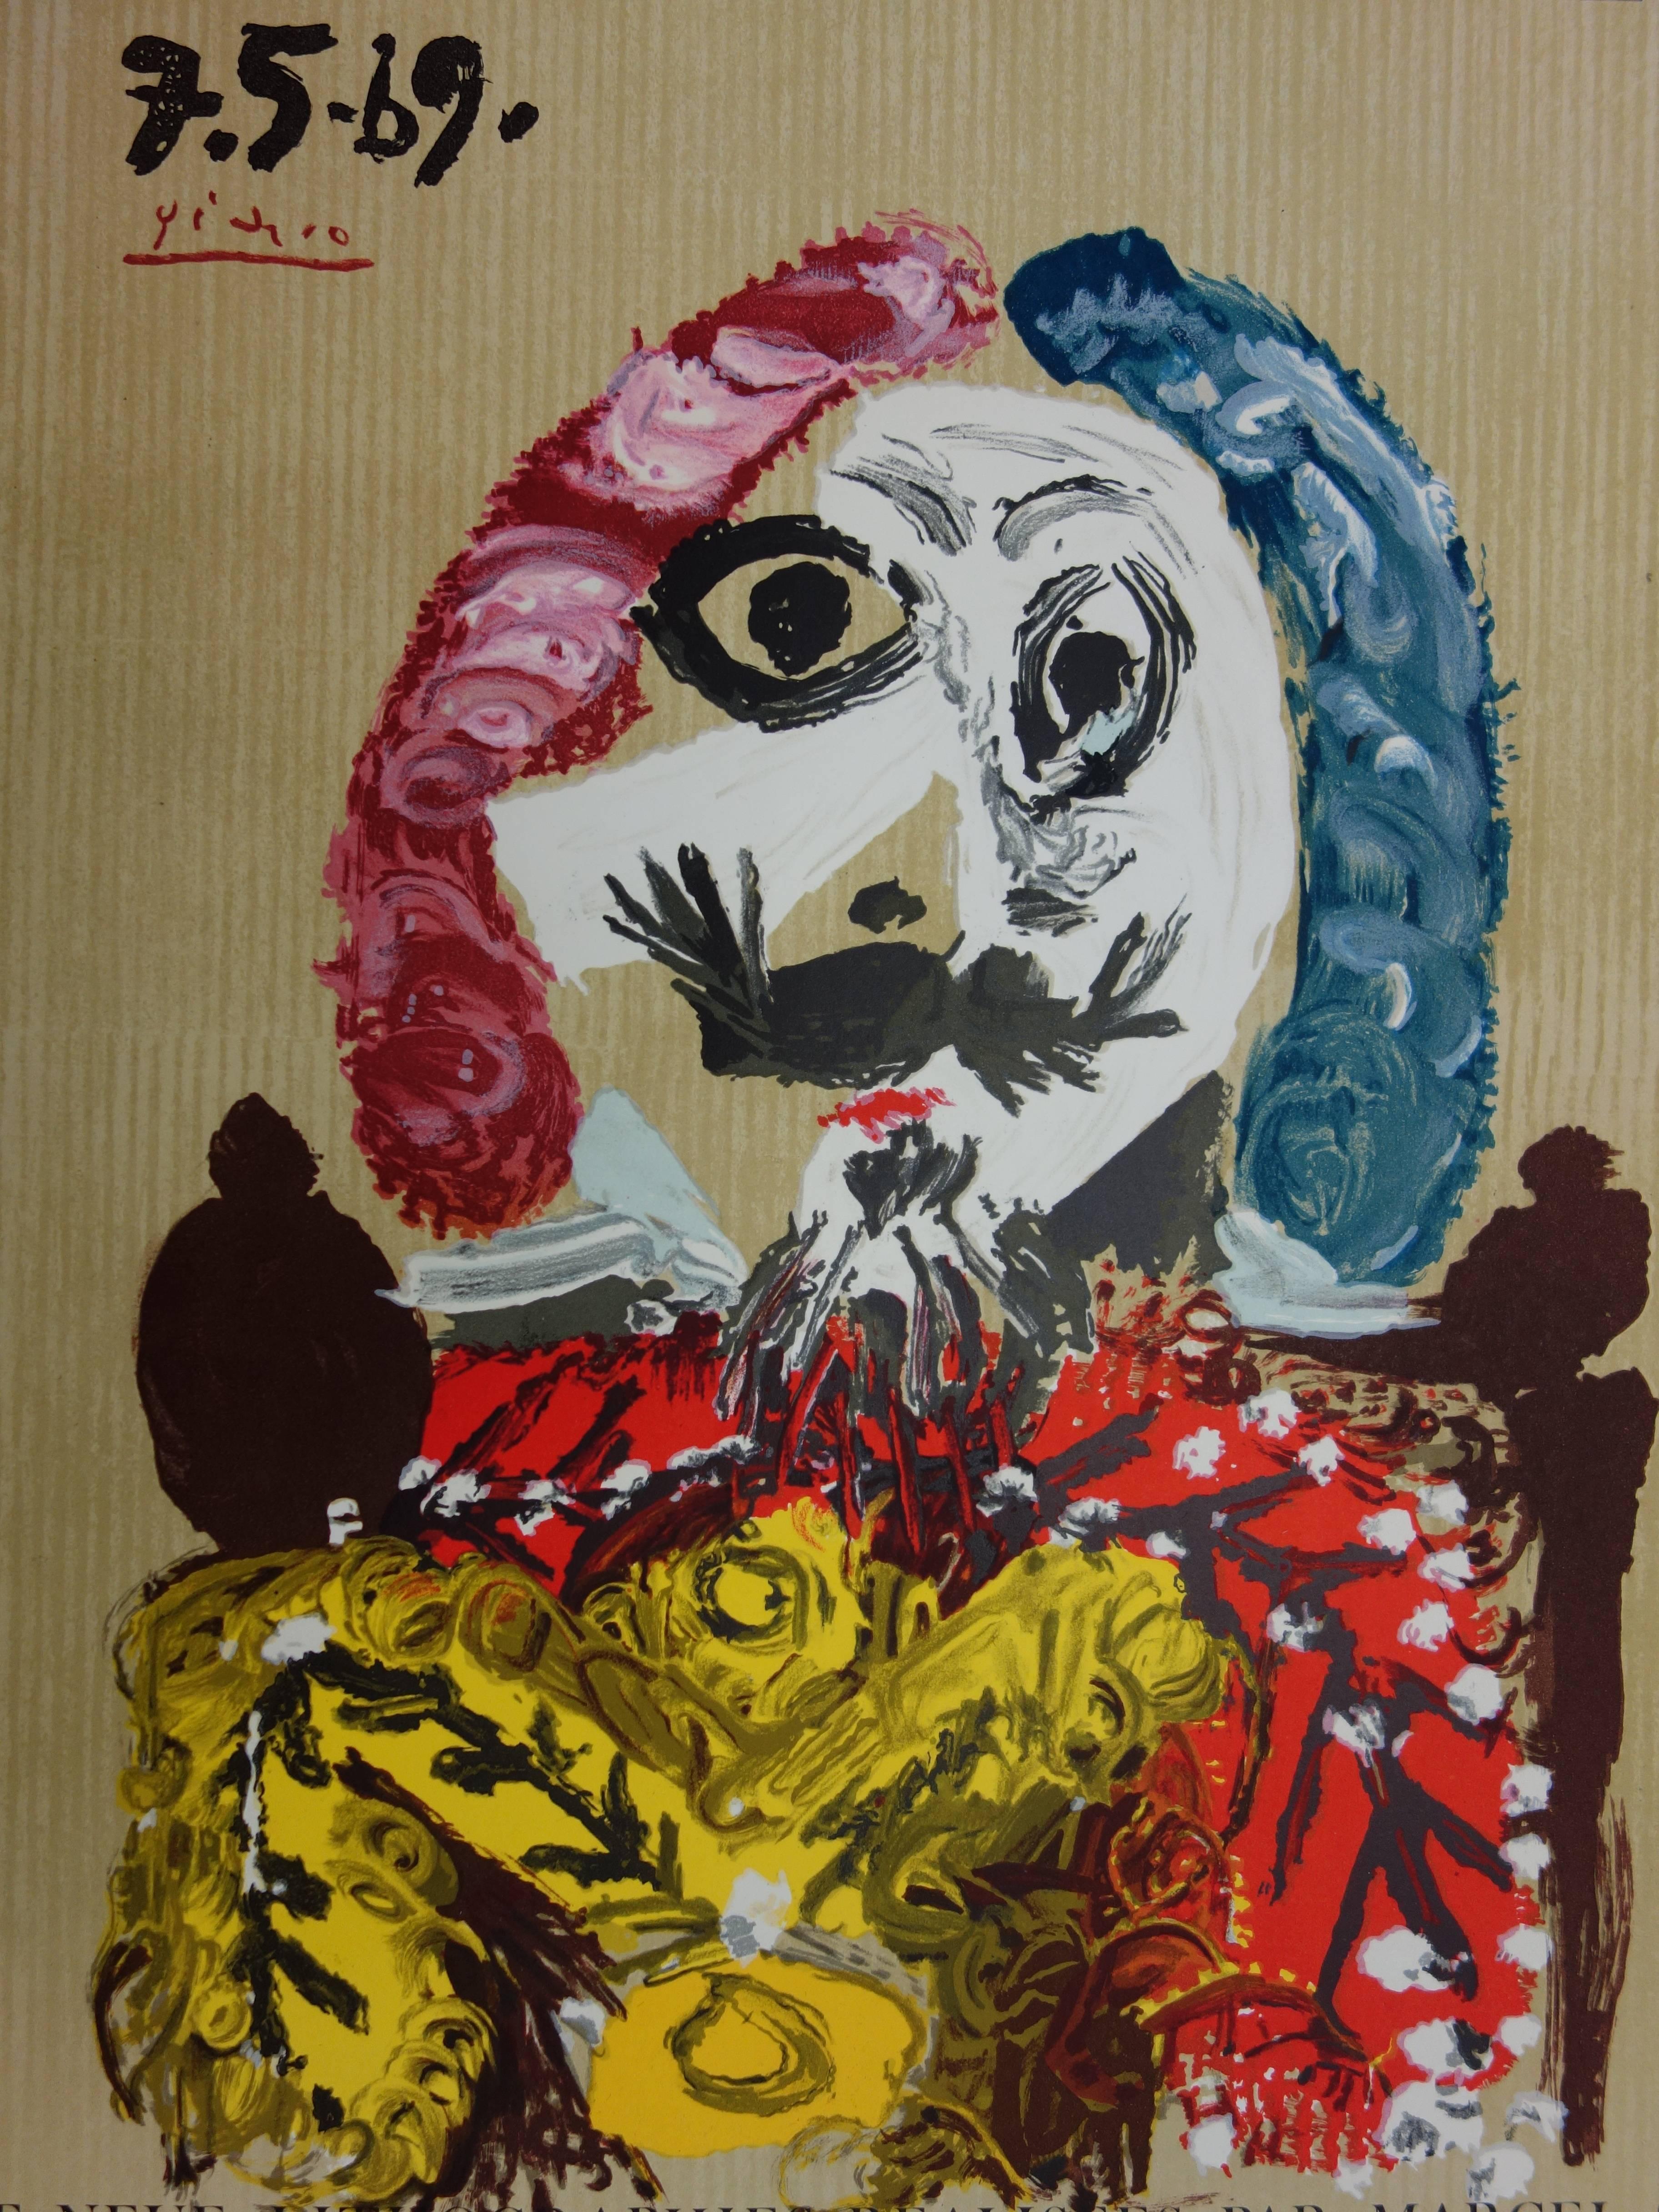 Imaginary Portraits : Elegant Rich Man - Lithograph - 1971 - Cubist Print by (after) Pablo Picasso